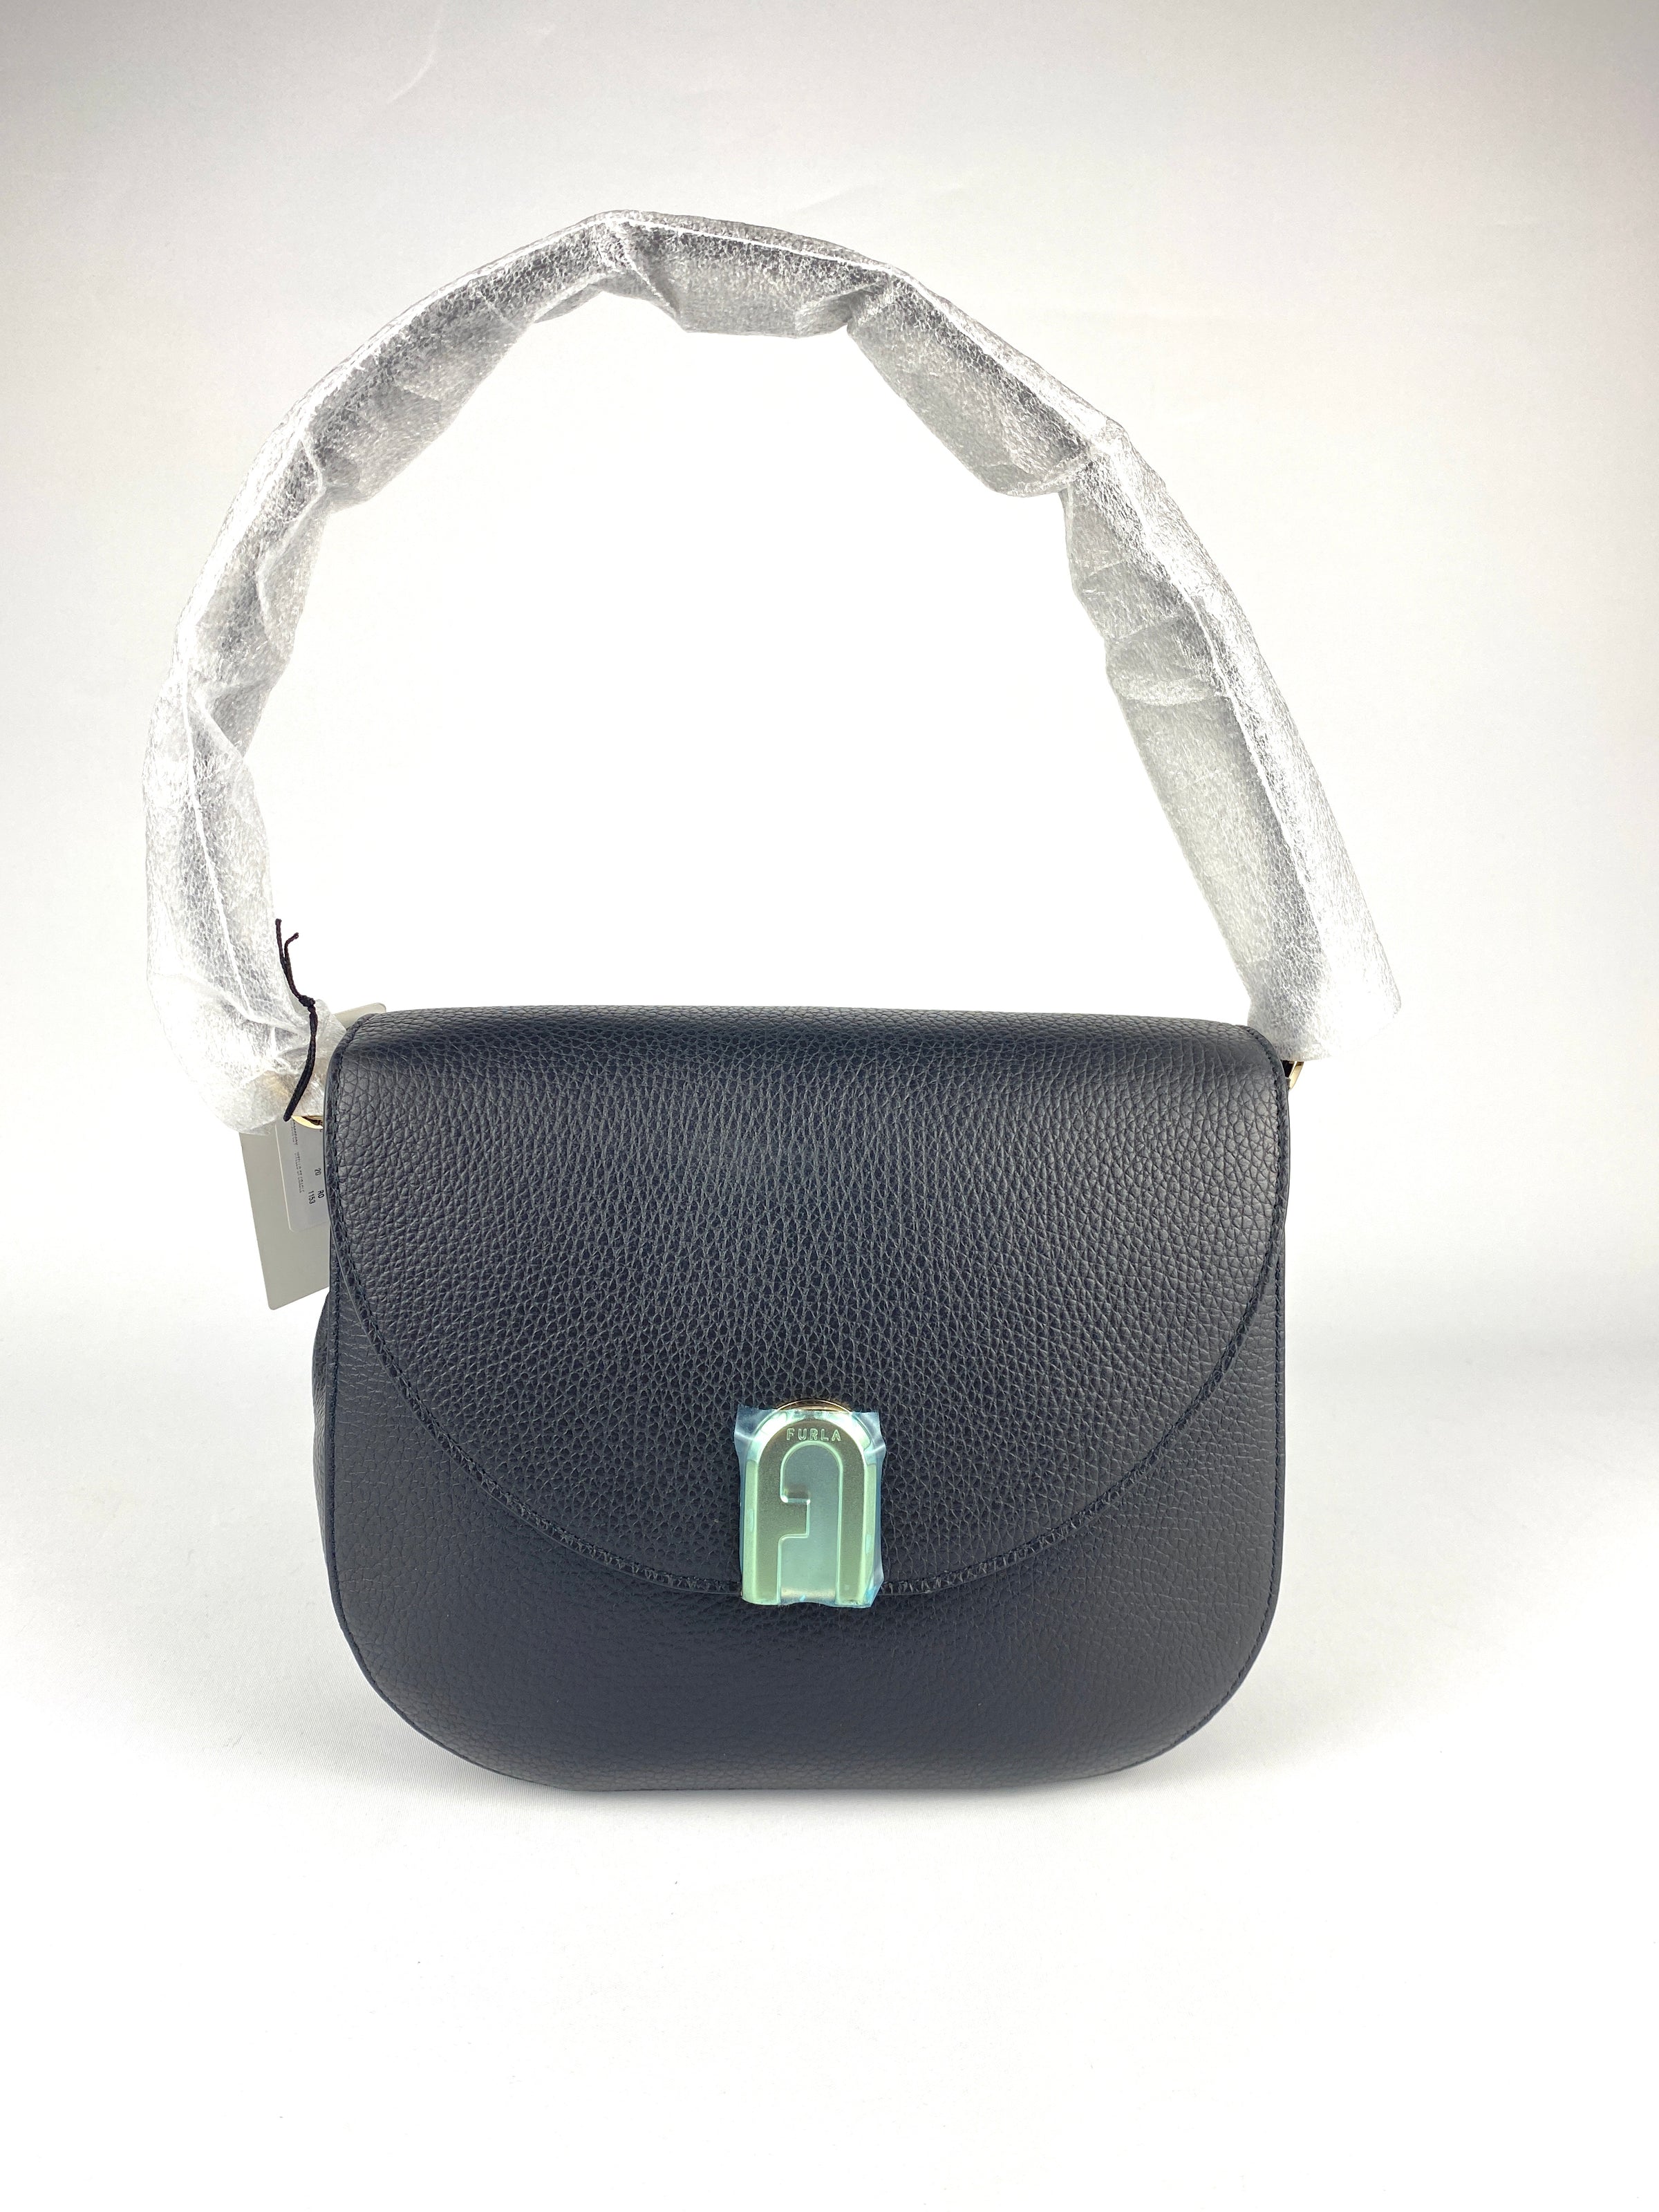 Furla | Bags | Rare Large Lt Blue Candy Snakeskin Furla Handbag | Poshmark